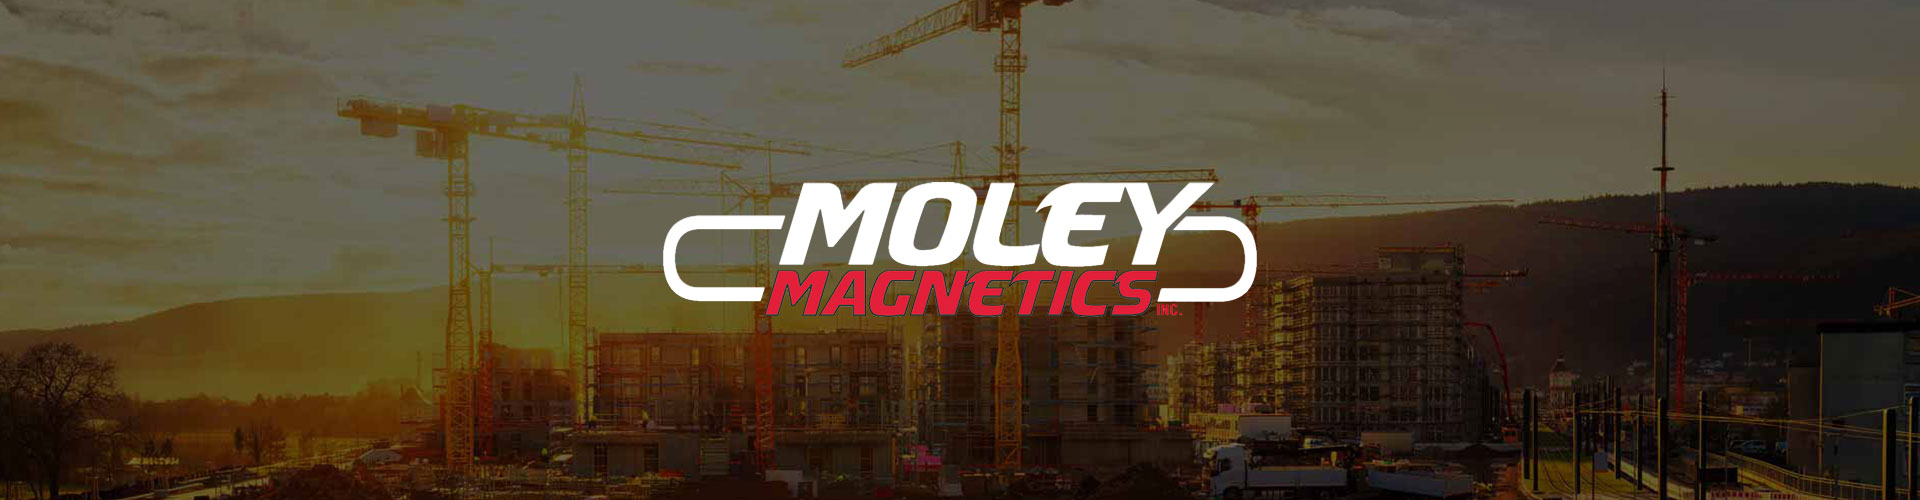 Moley Magnetics banner